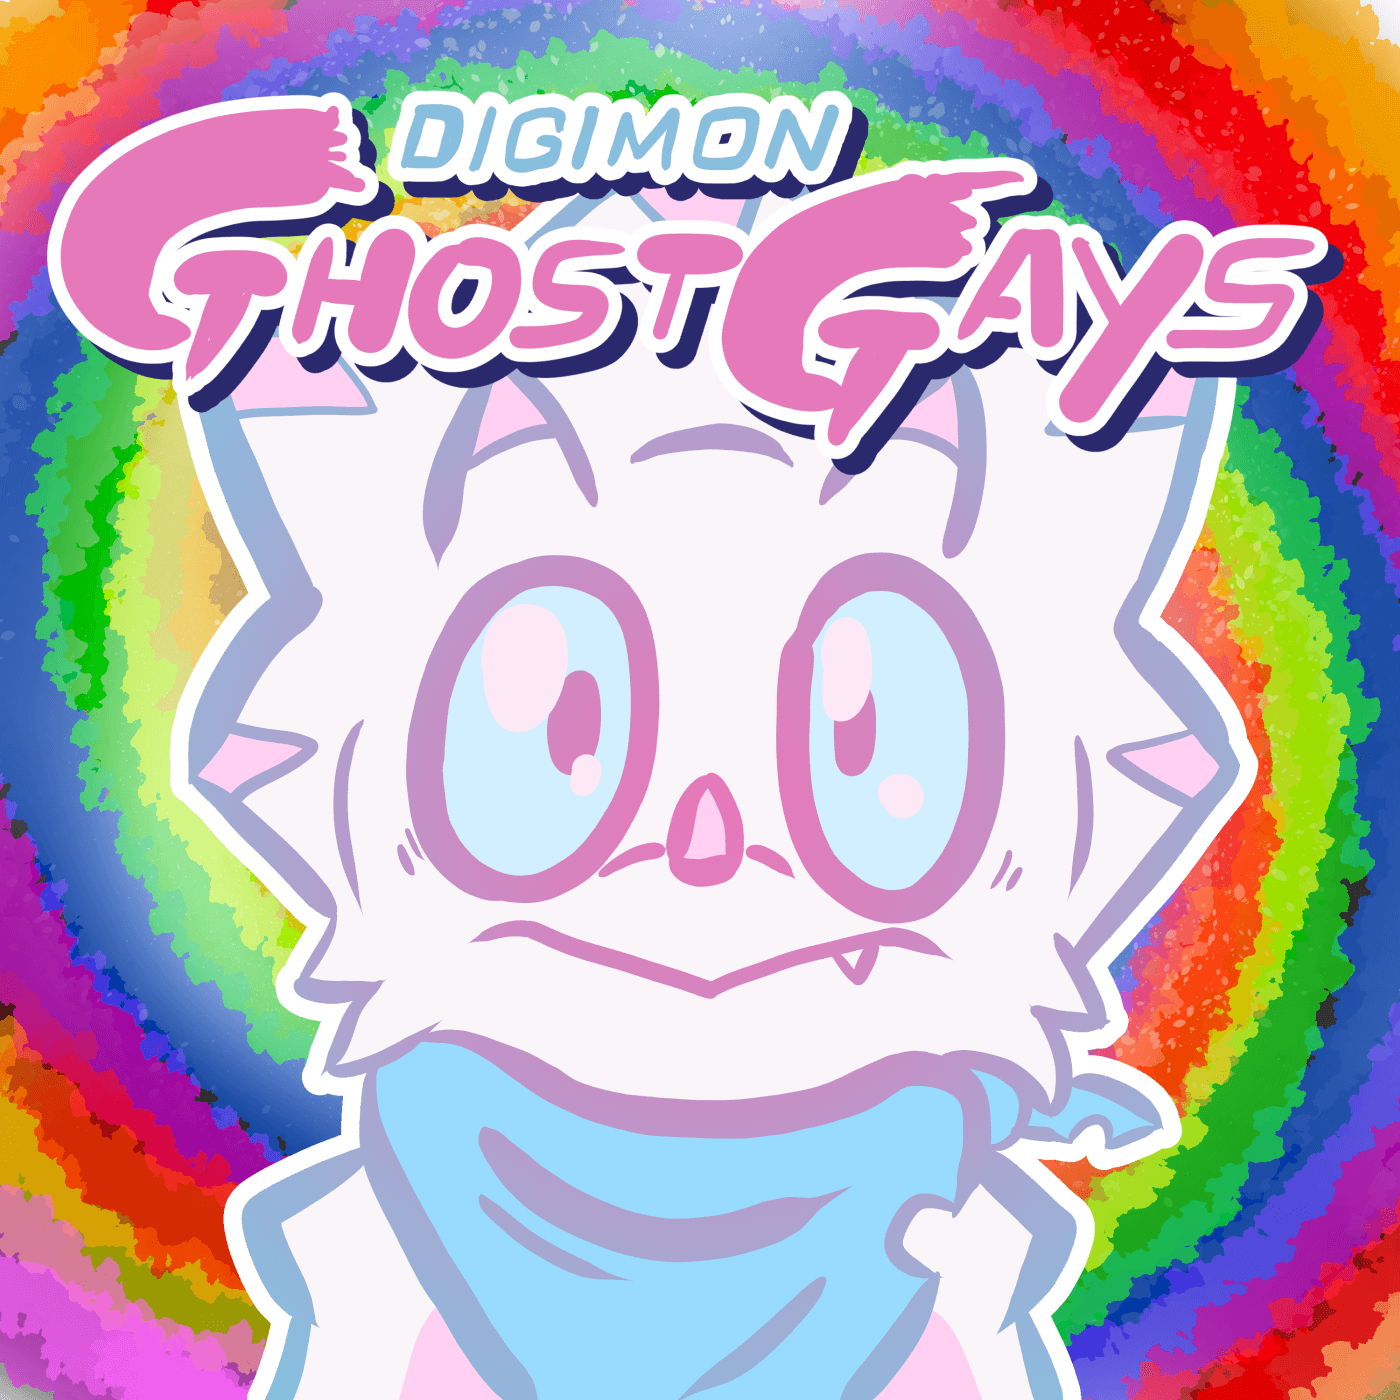 Digimon Ghost Gays